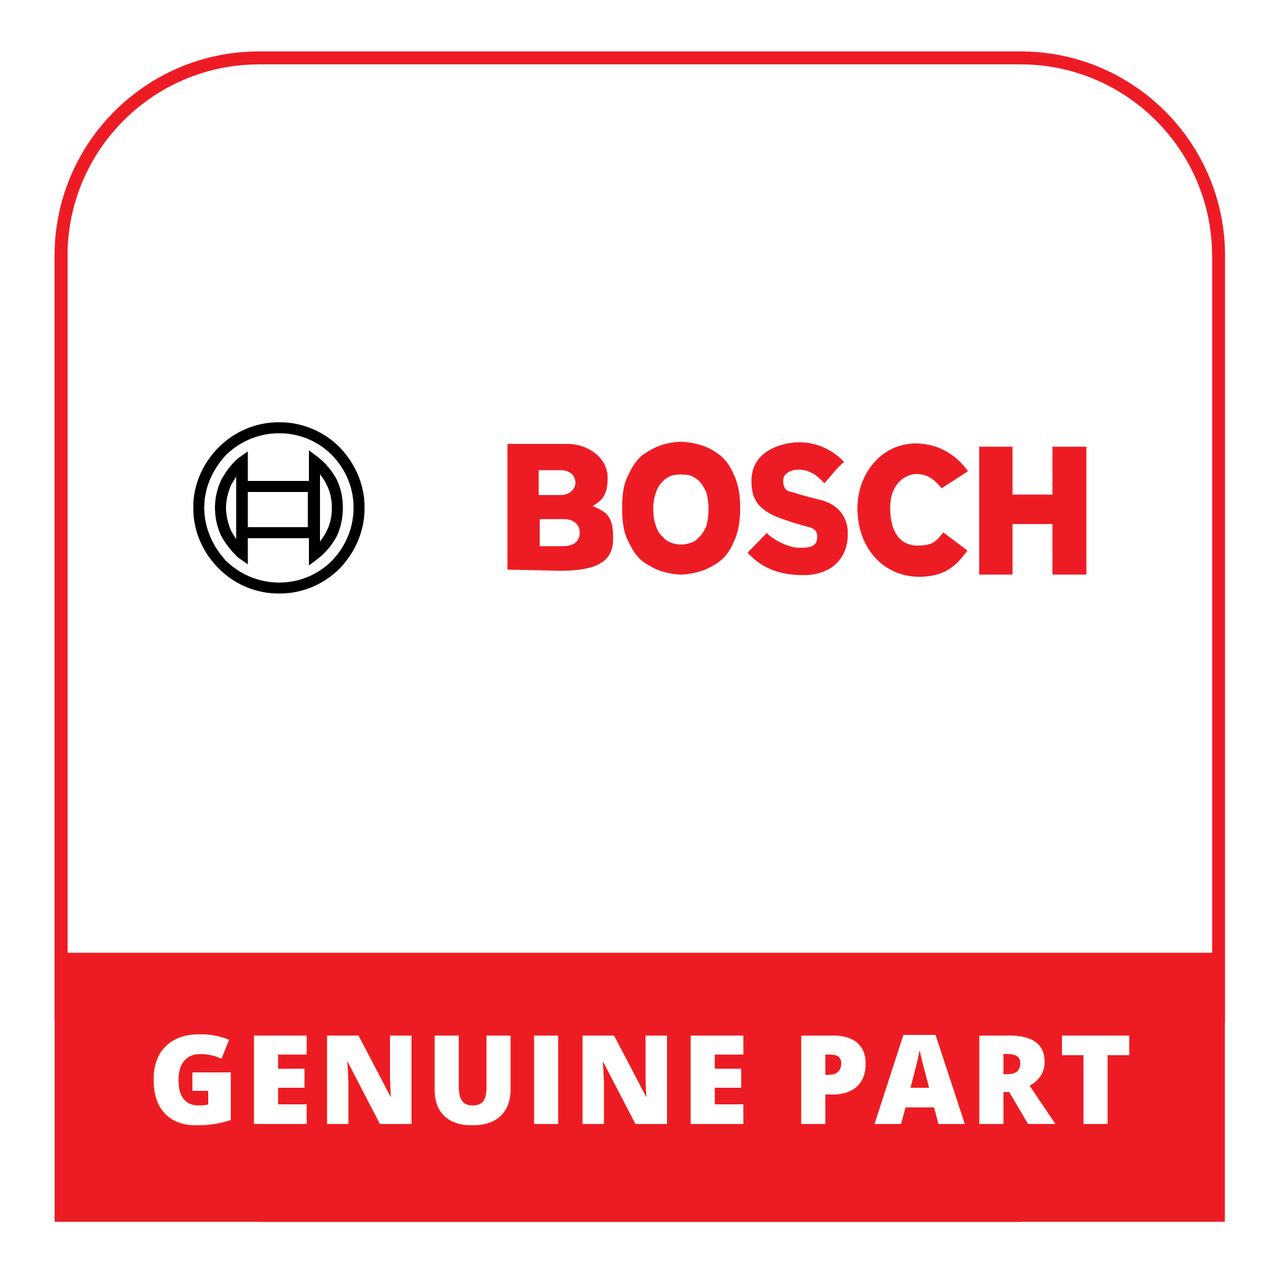 Bosch (Thermador) 10014119 - Clip - Genuine Bosch (Thermador) Part